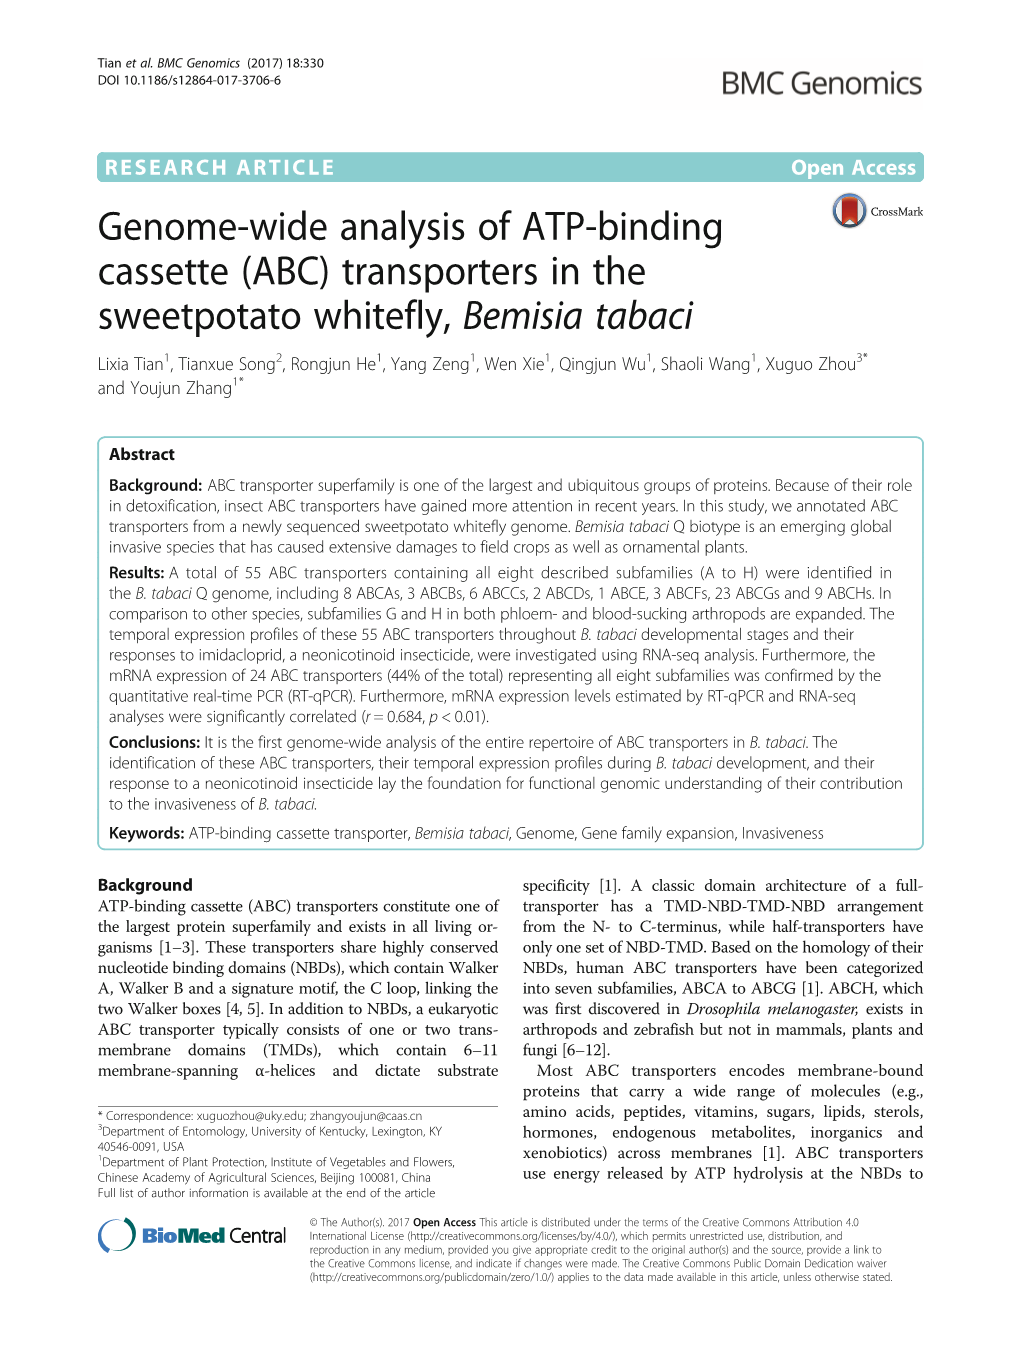 Genome-Wide Analysis of ATP-Binding